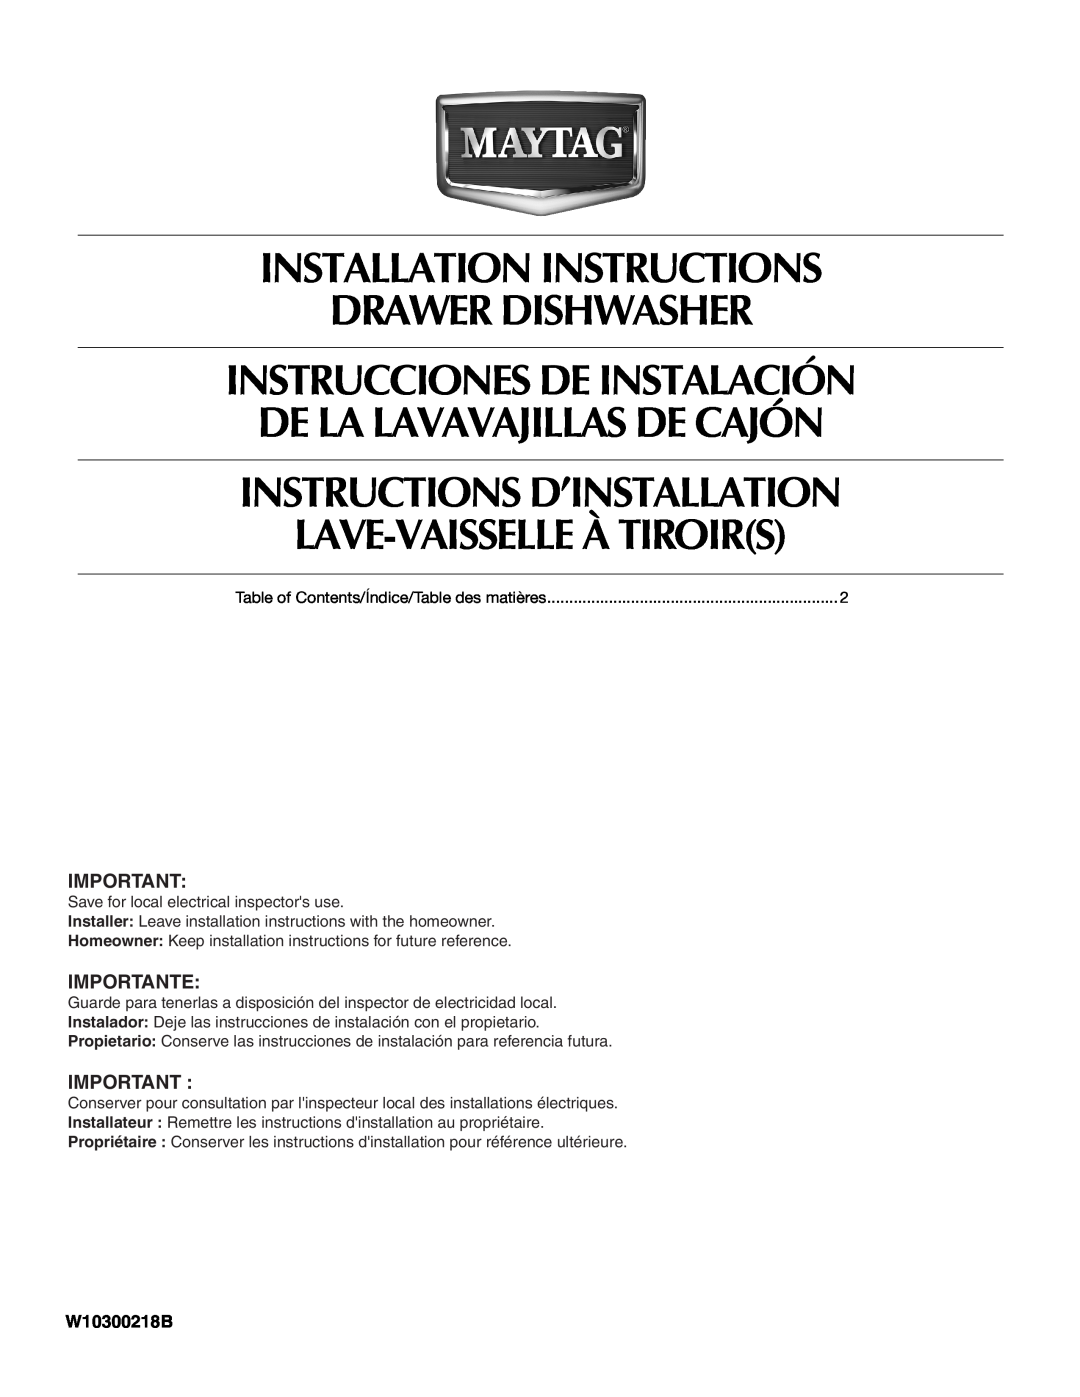 Maytag W10300218B installation instructions Installation Instructions Drawer Dishwasher, Importante 